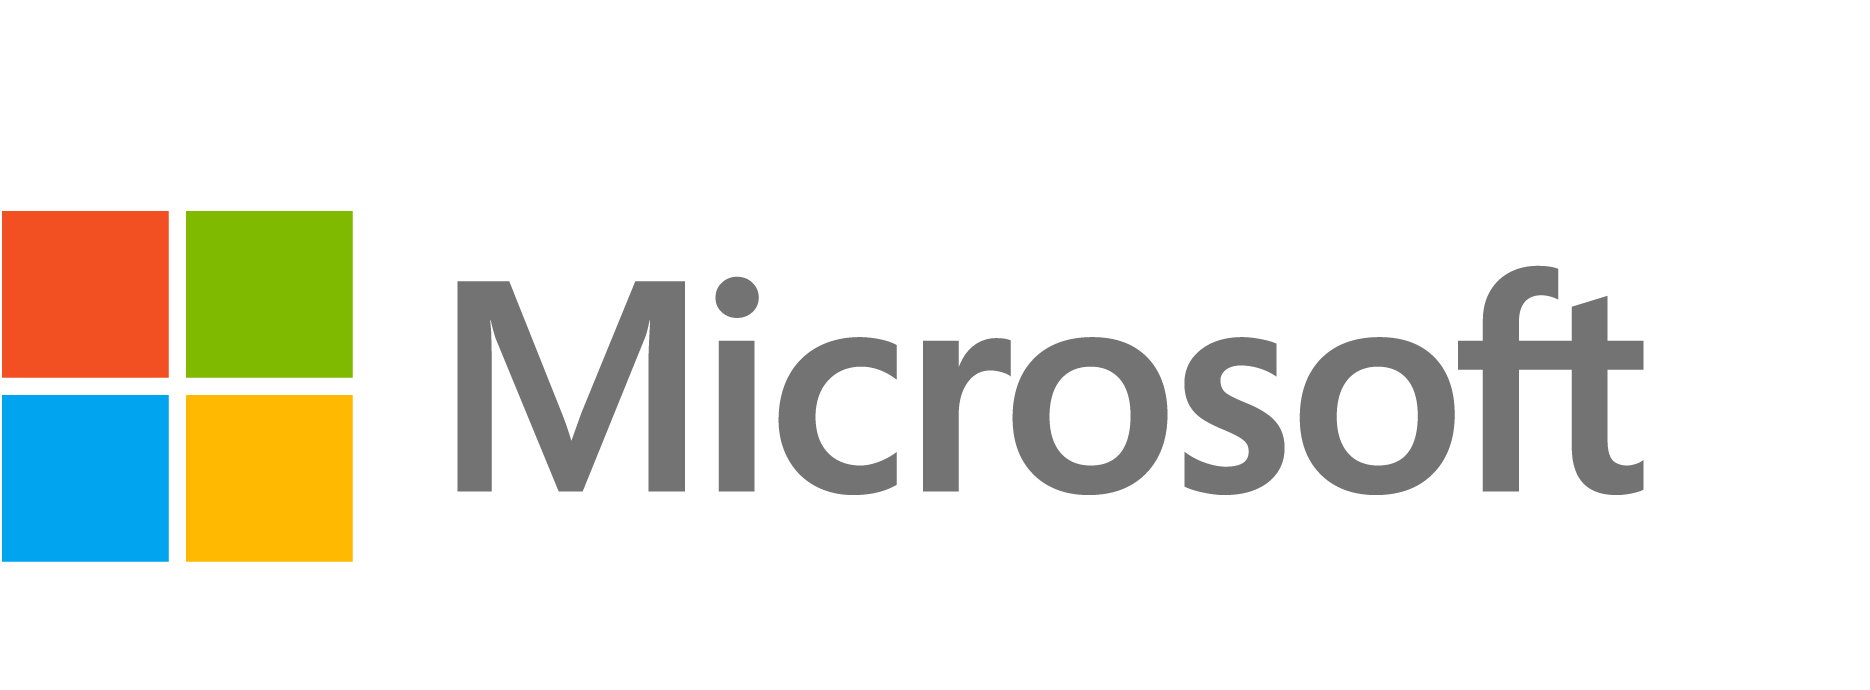 Microsoft-Logo-PNG (002).png